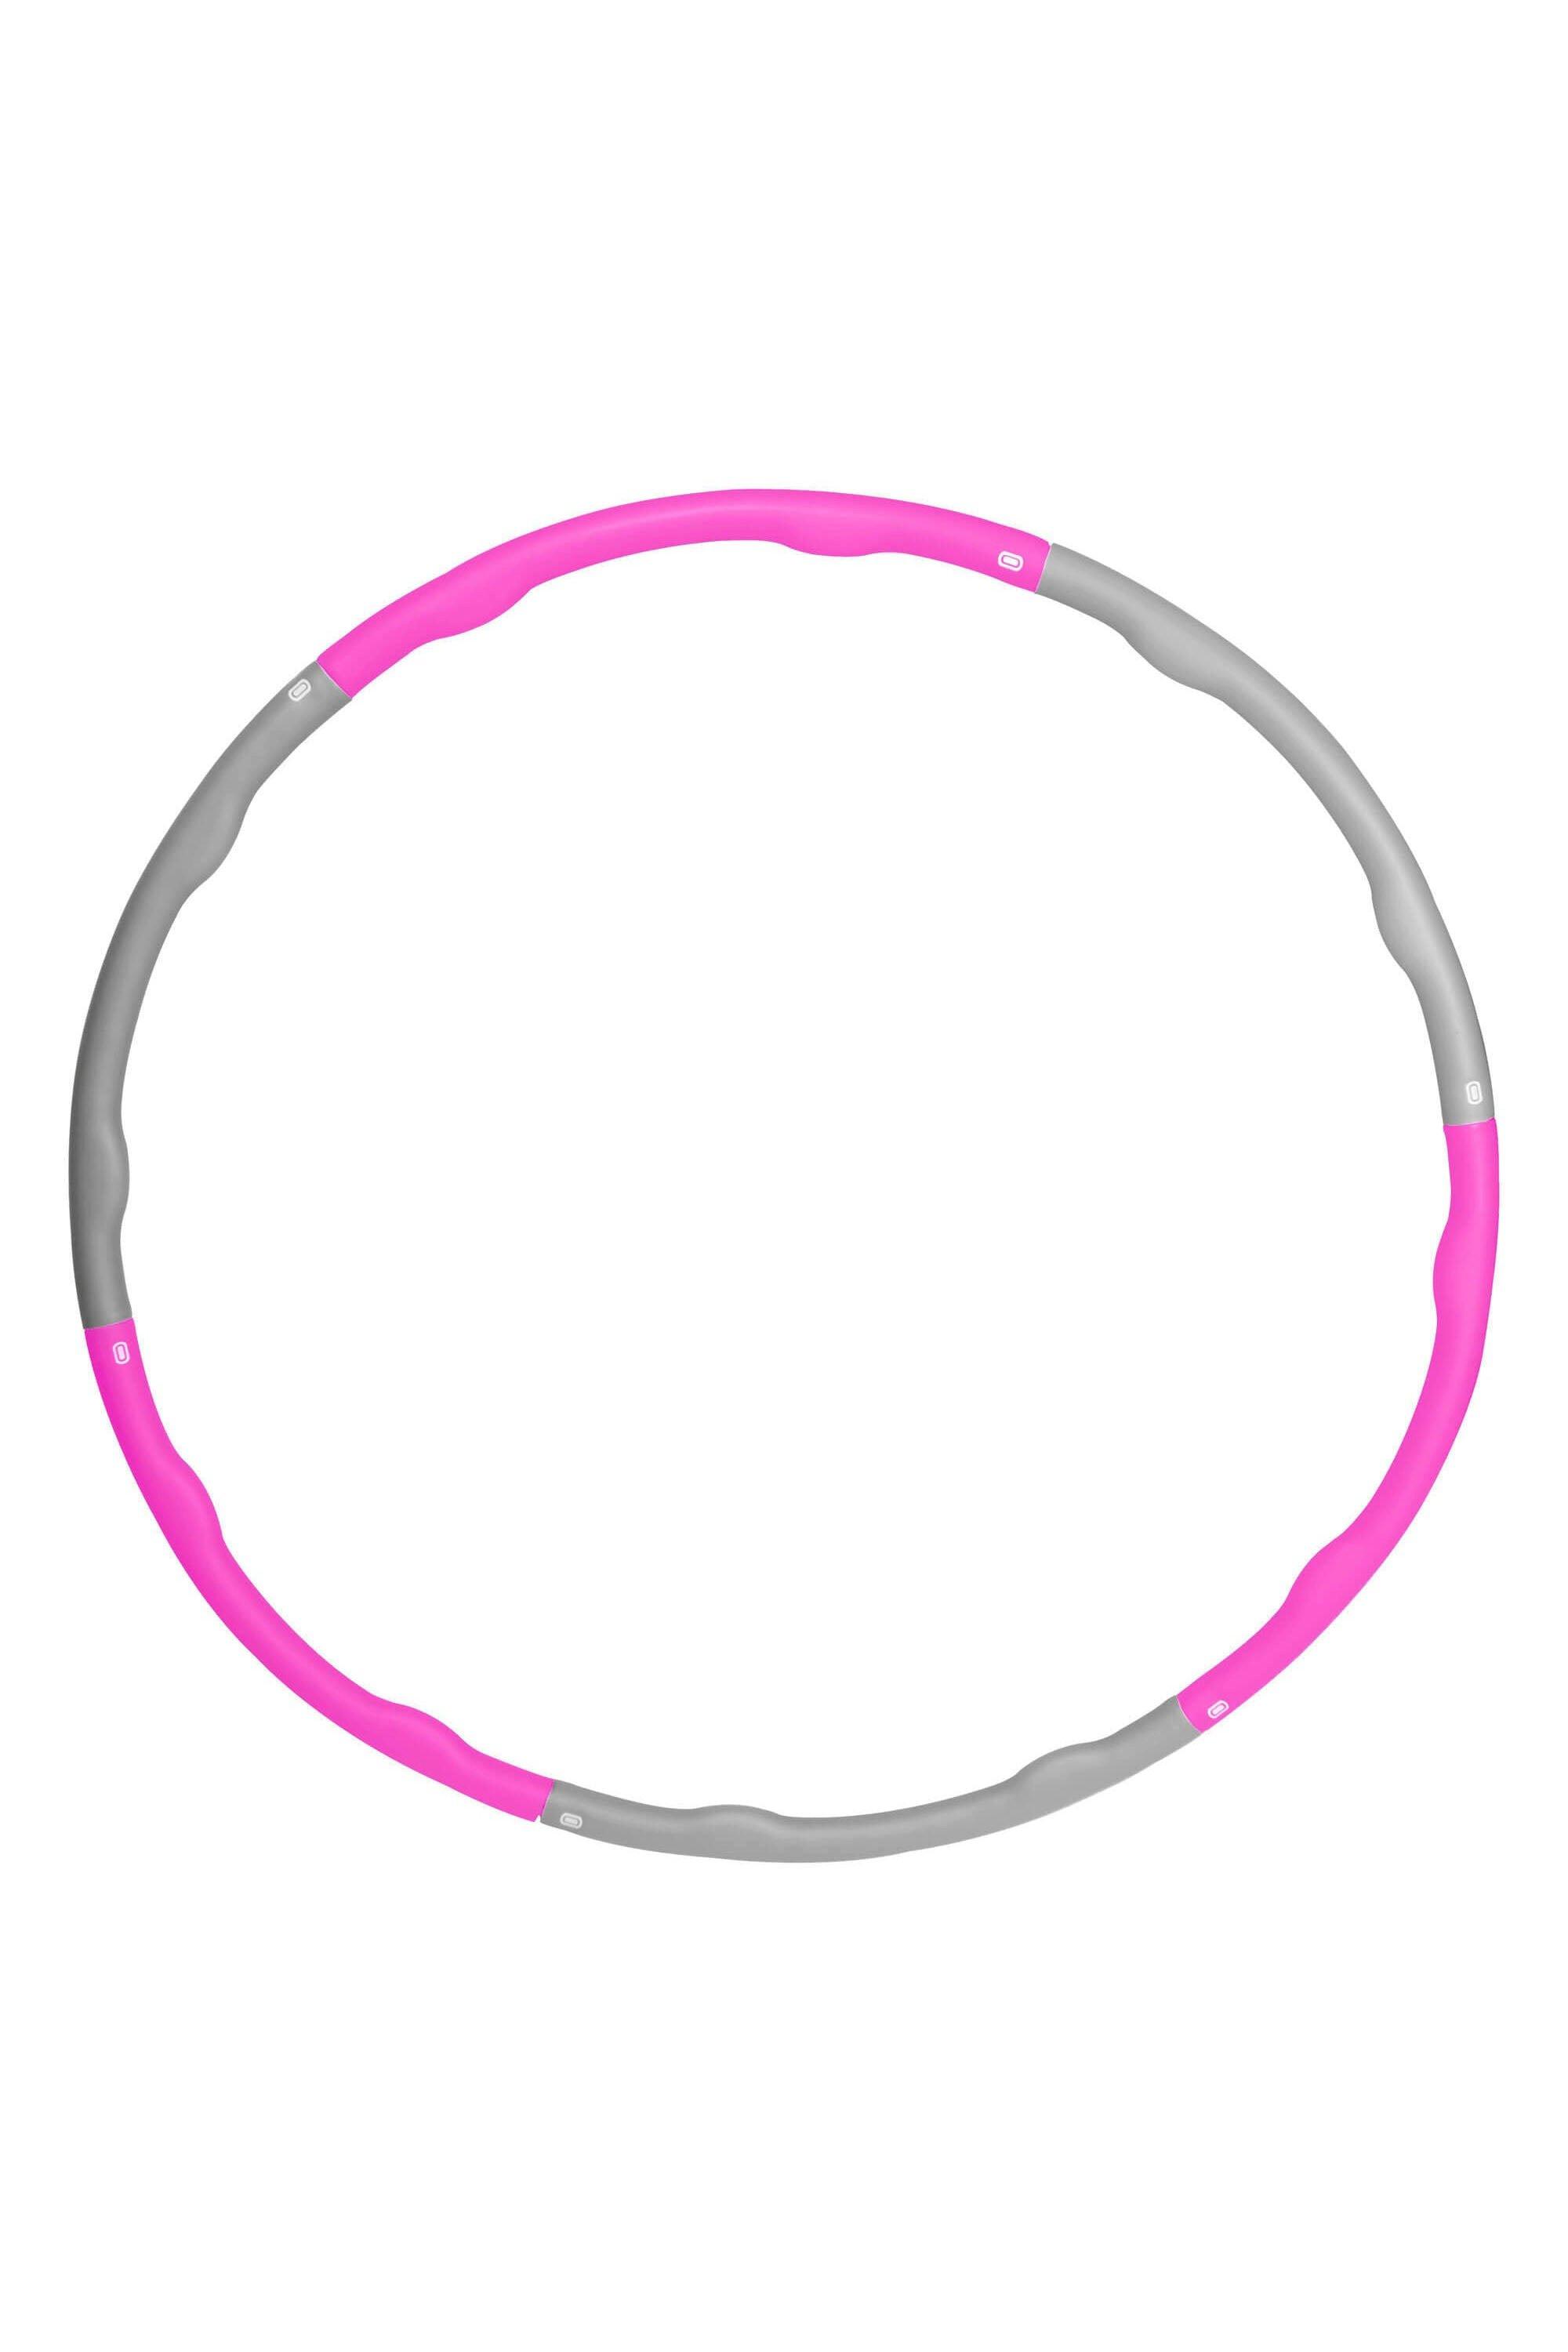 Azure Weighted Hula Hoop|pink